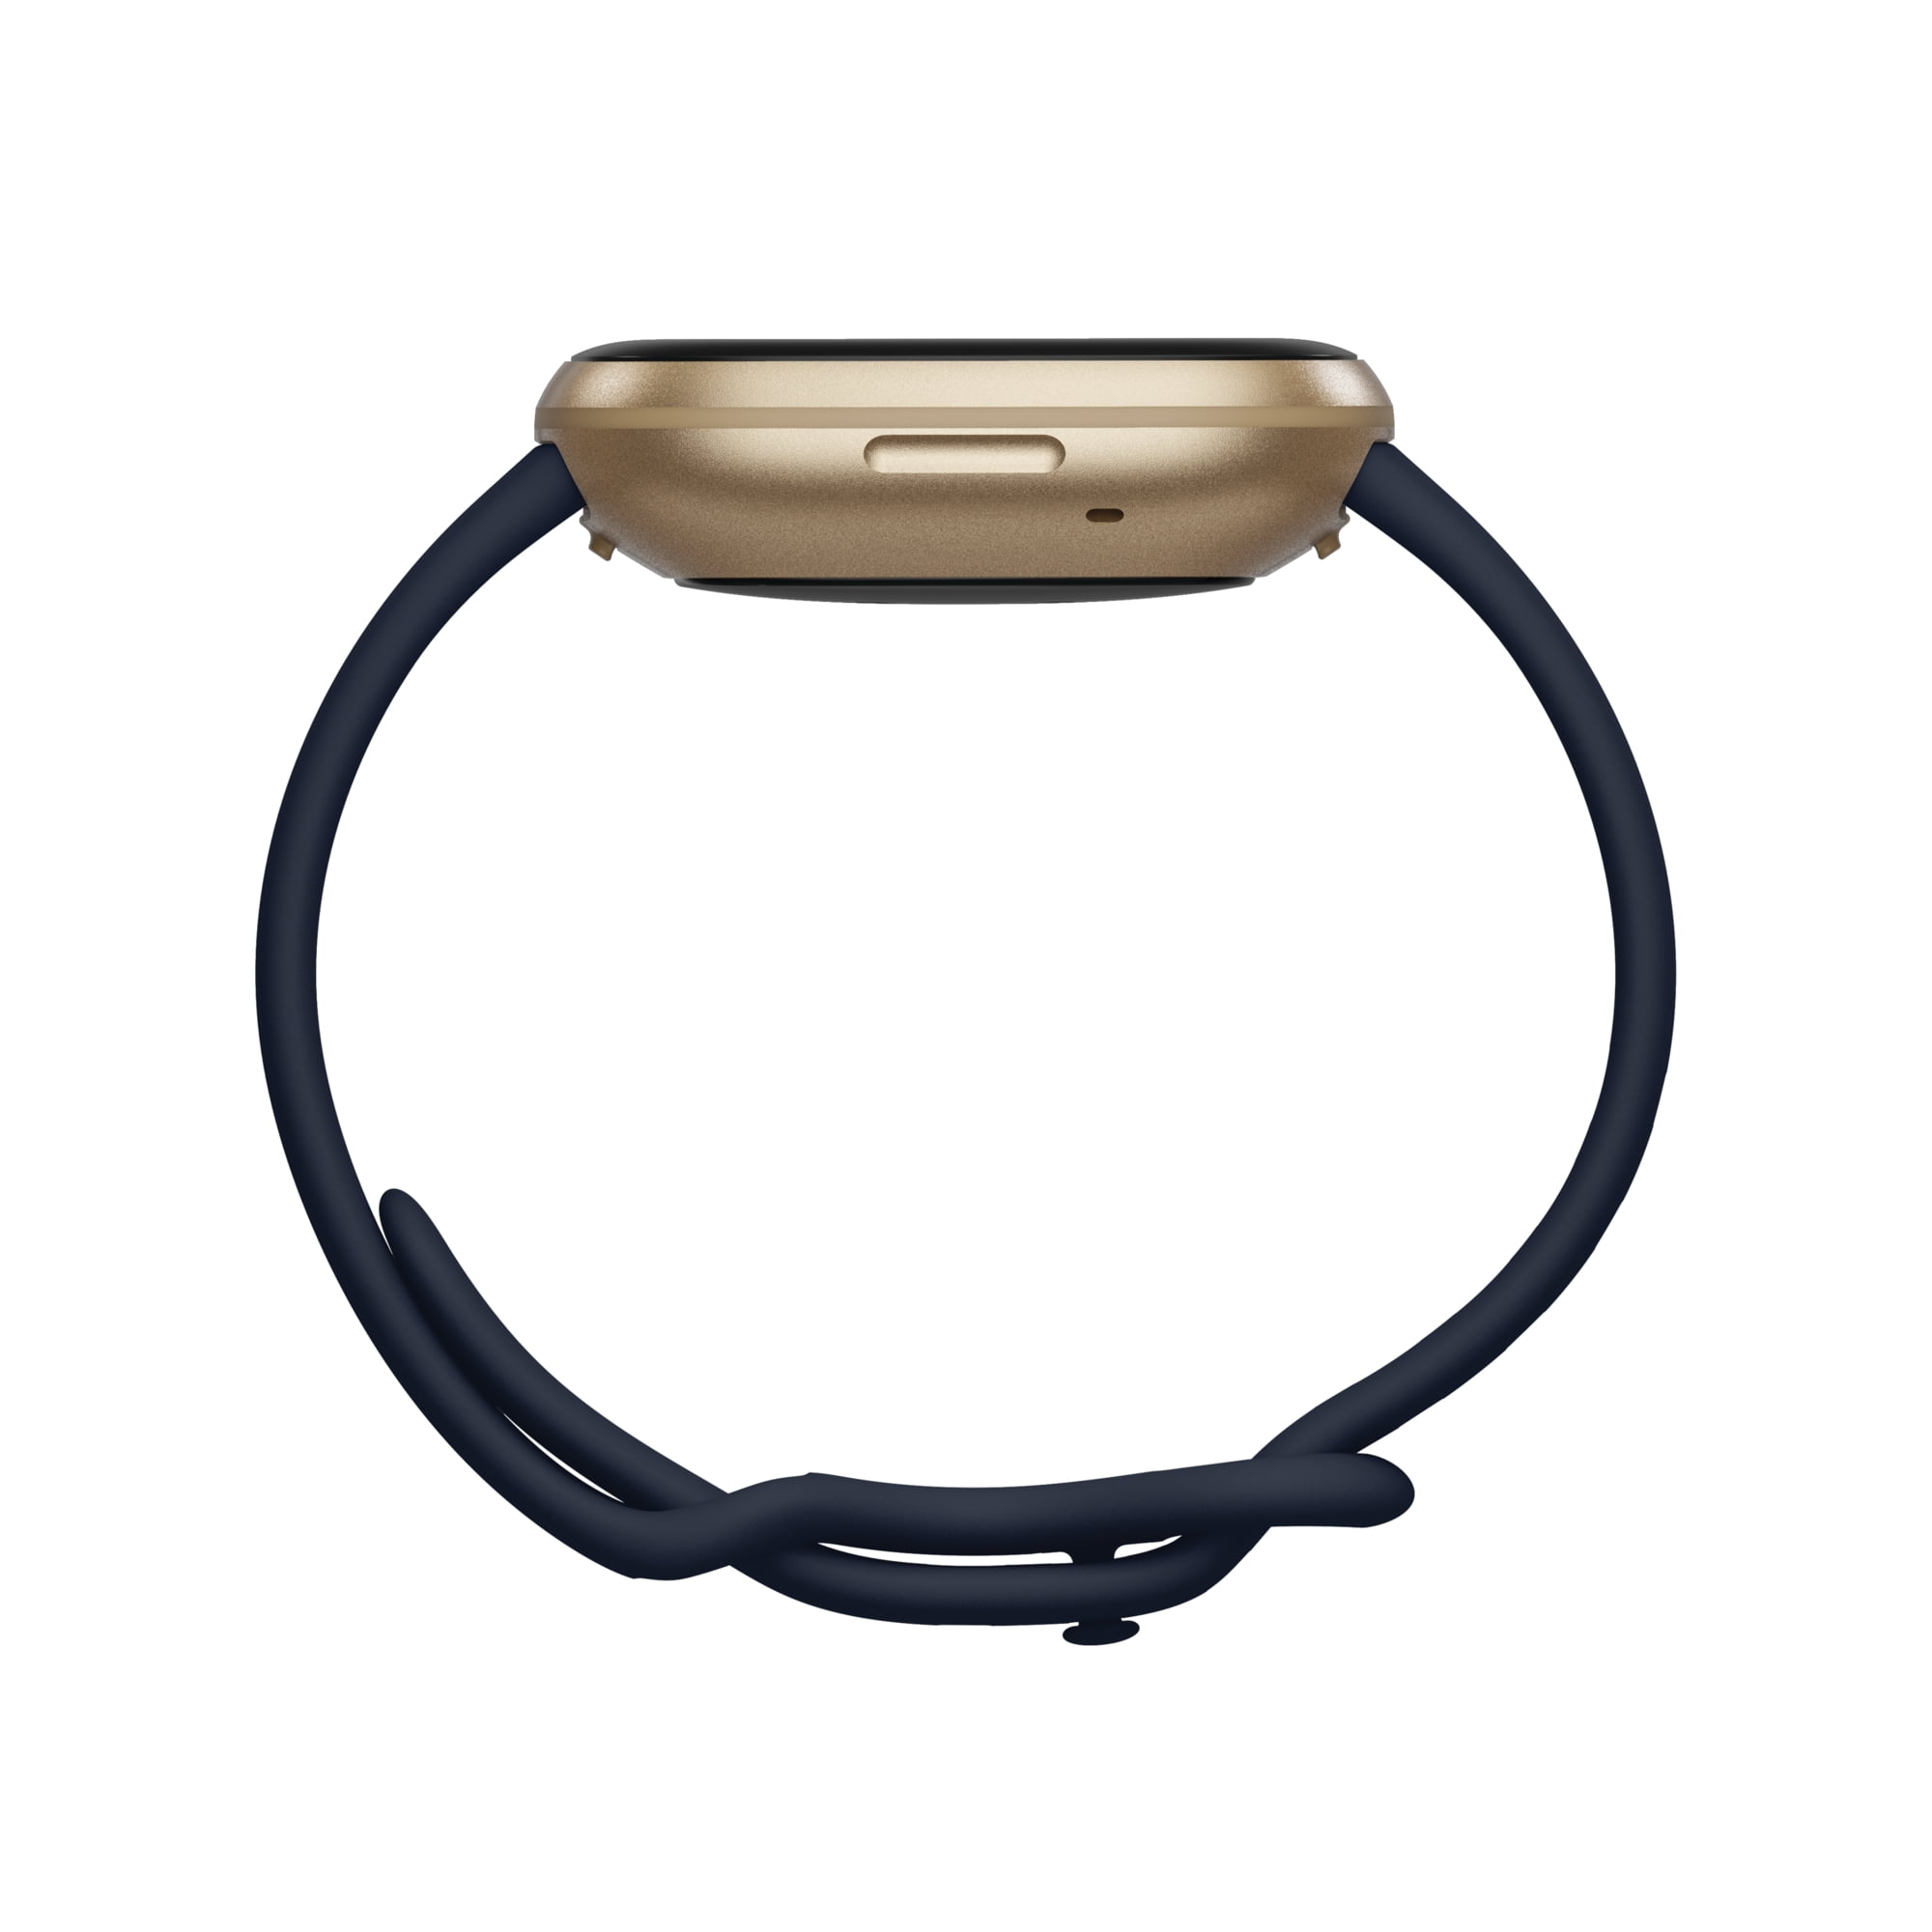 Fitbit Versa 3 Health & Fitness Smartwatch - Midnight/Soft Gold 